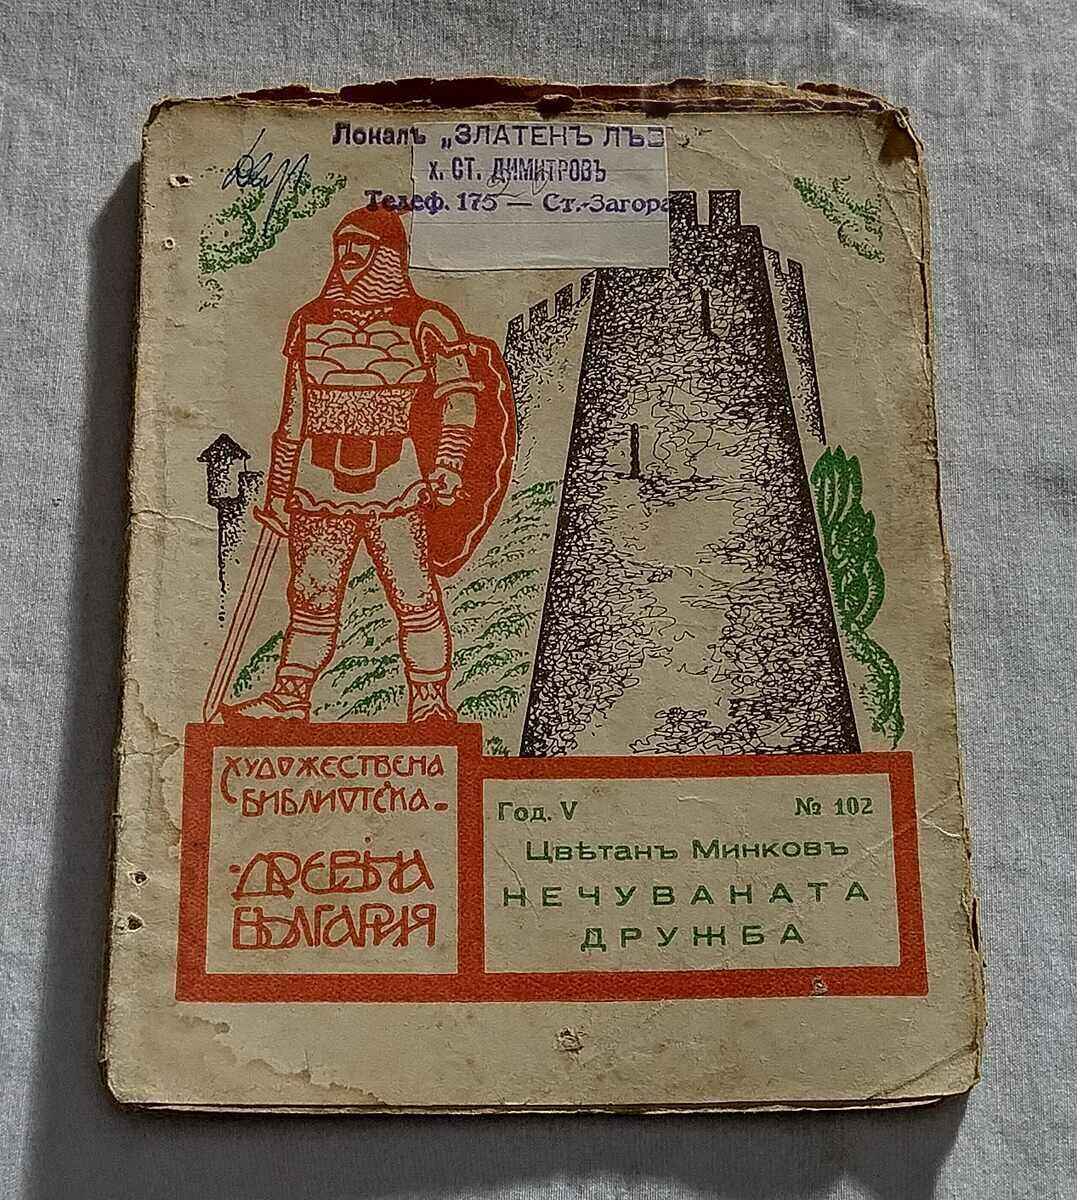 THE UNHEARD OF FRIENDSHIP COLOR. MINKO'S BIBLE "ANCIENT BULGARIA" 1932